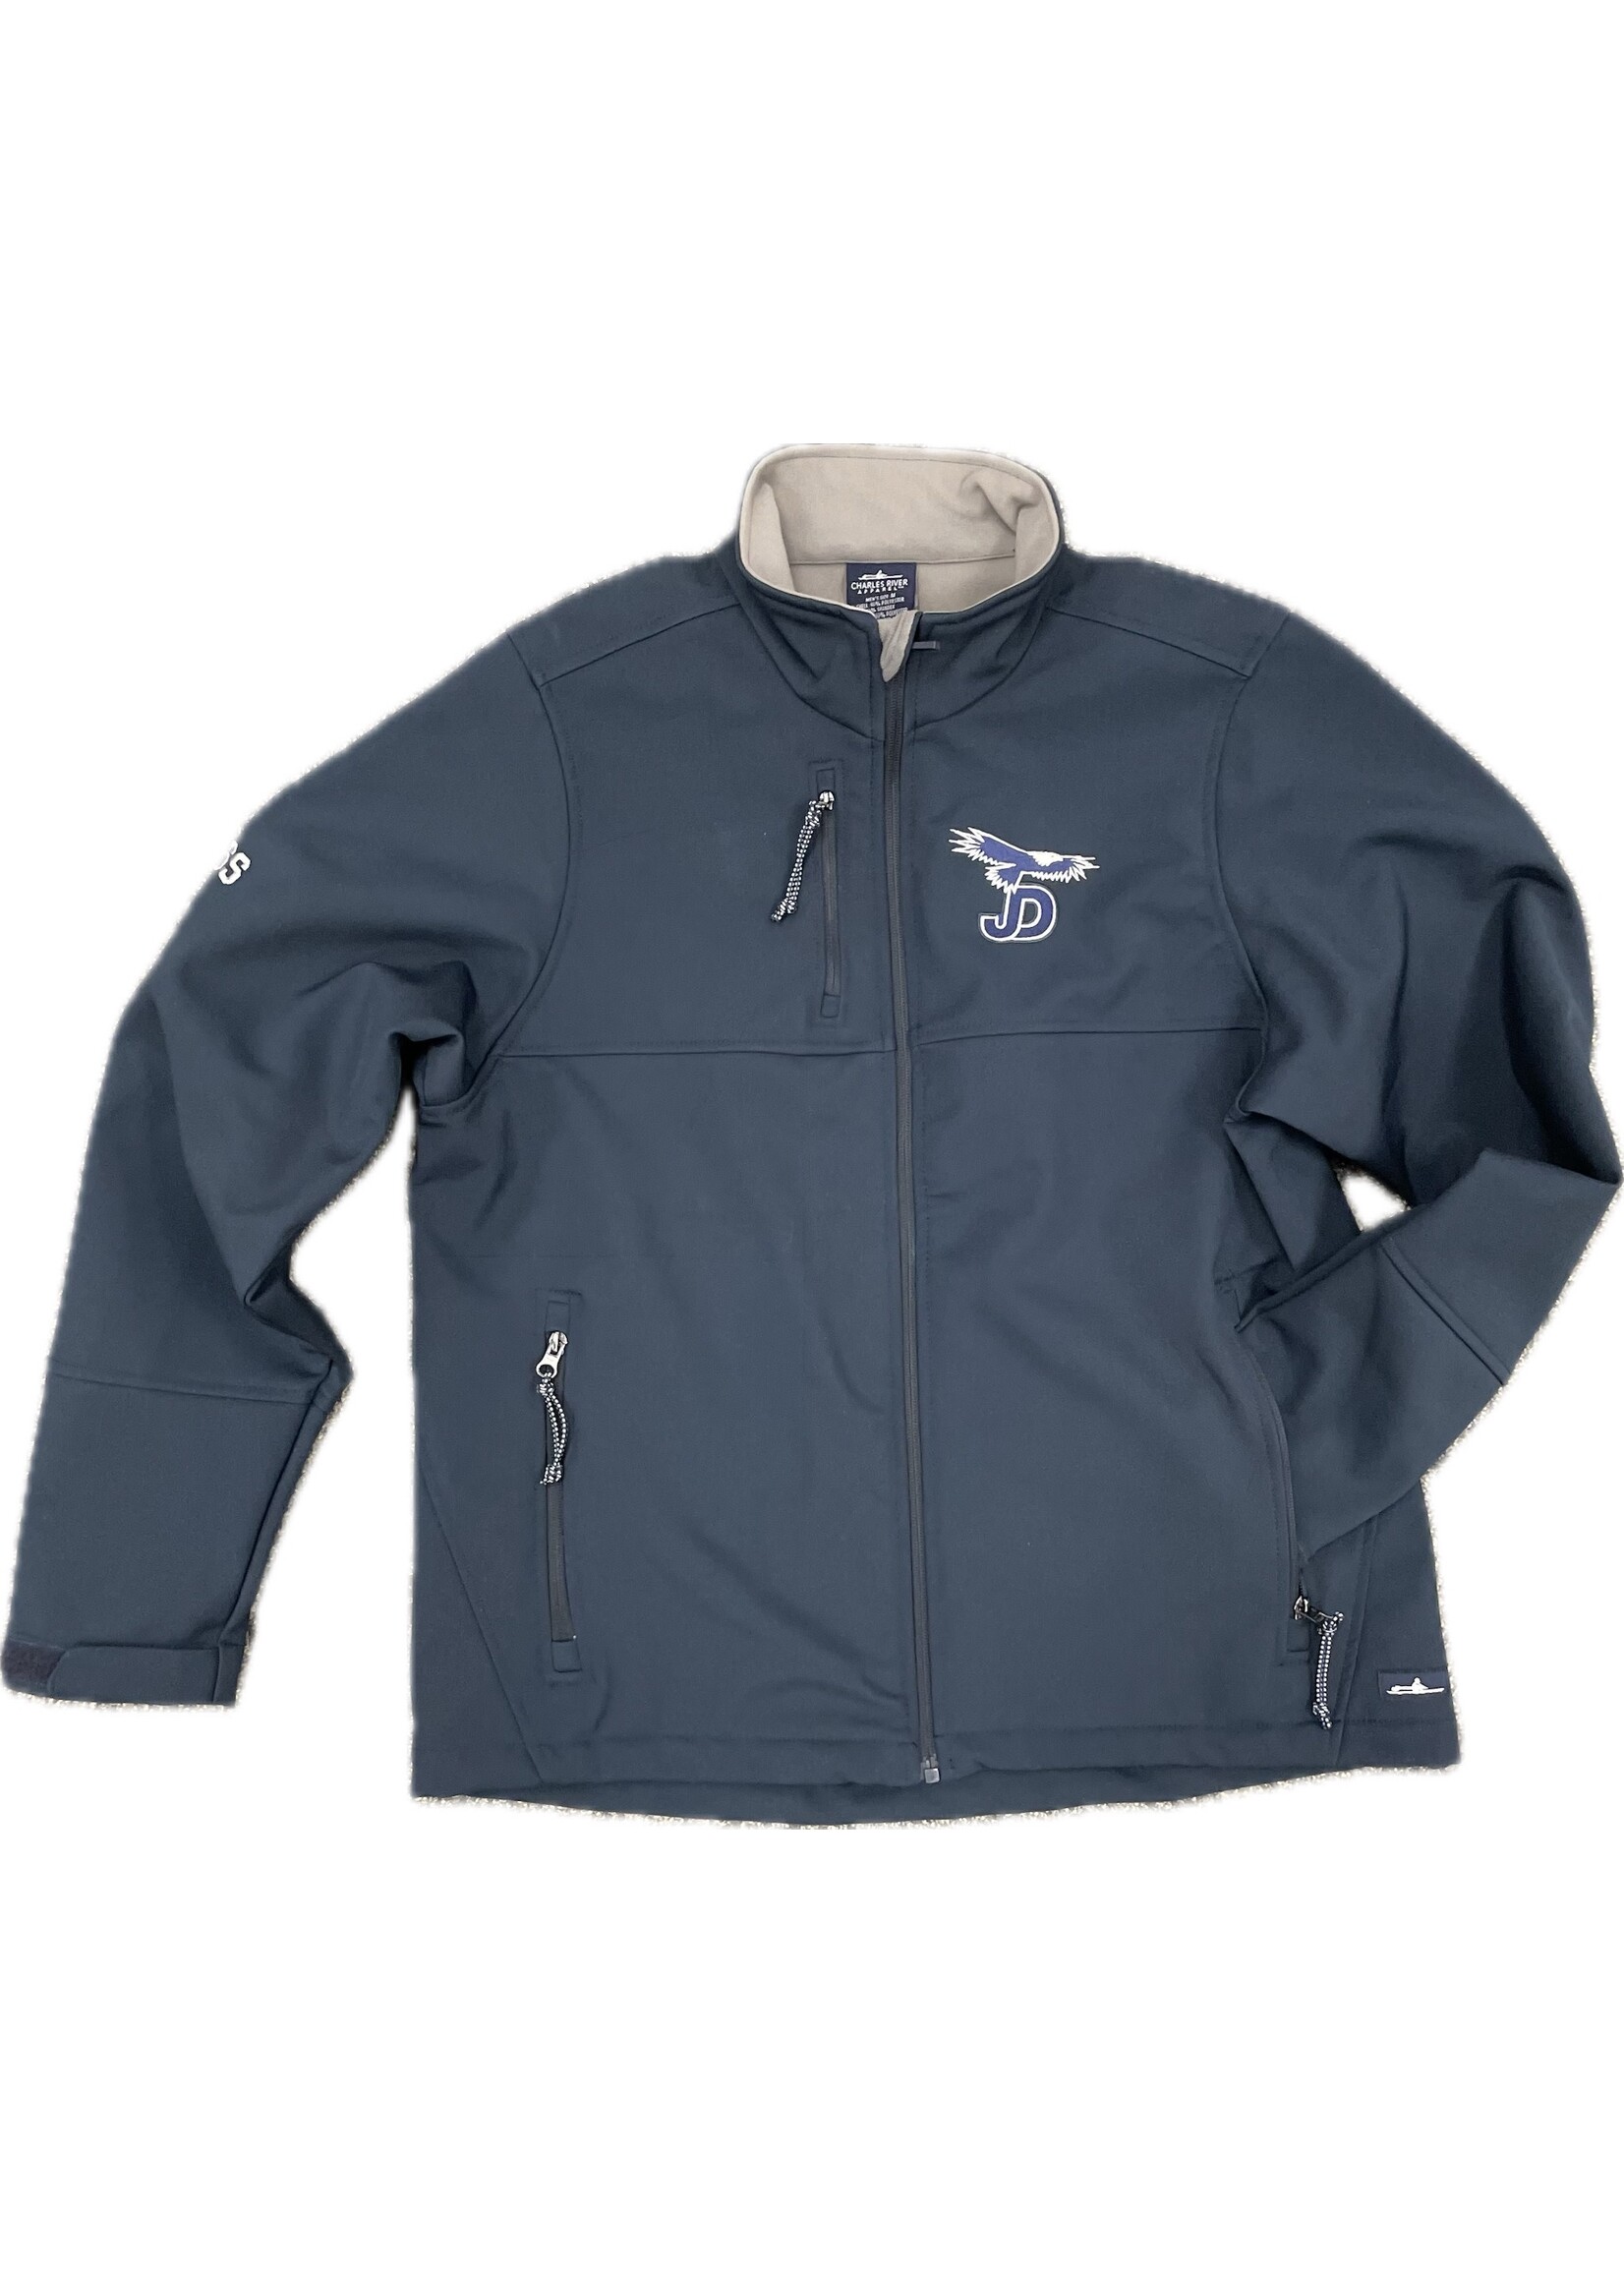 NON-UNIFORM Lacrosse Soft Shell Jacket, custom